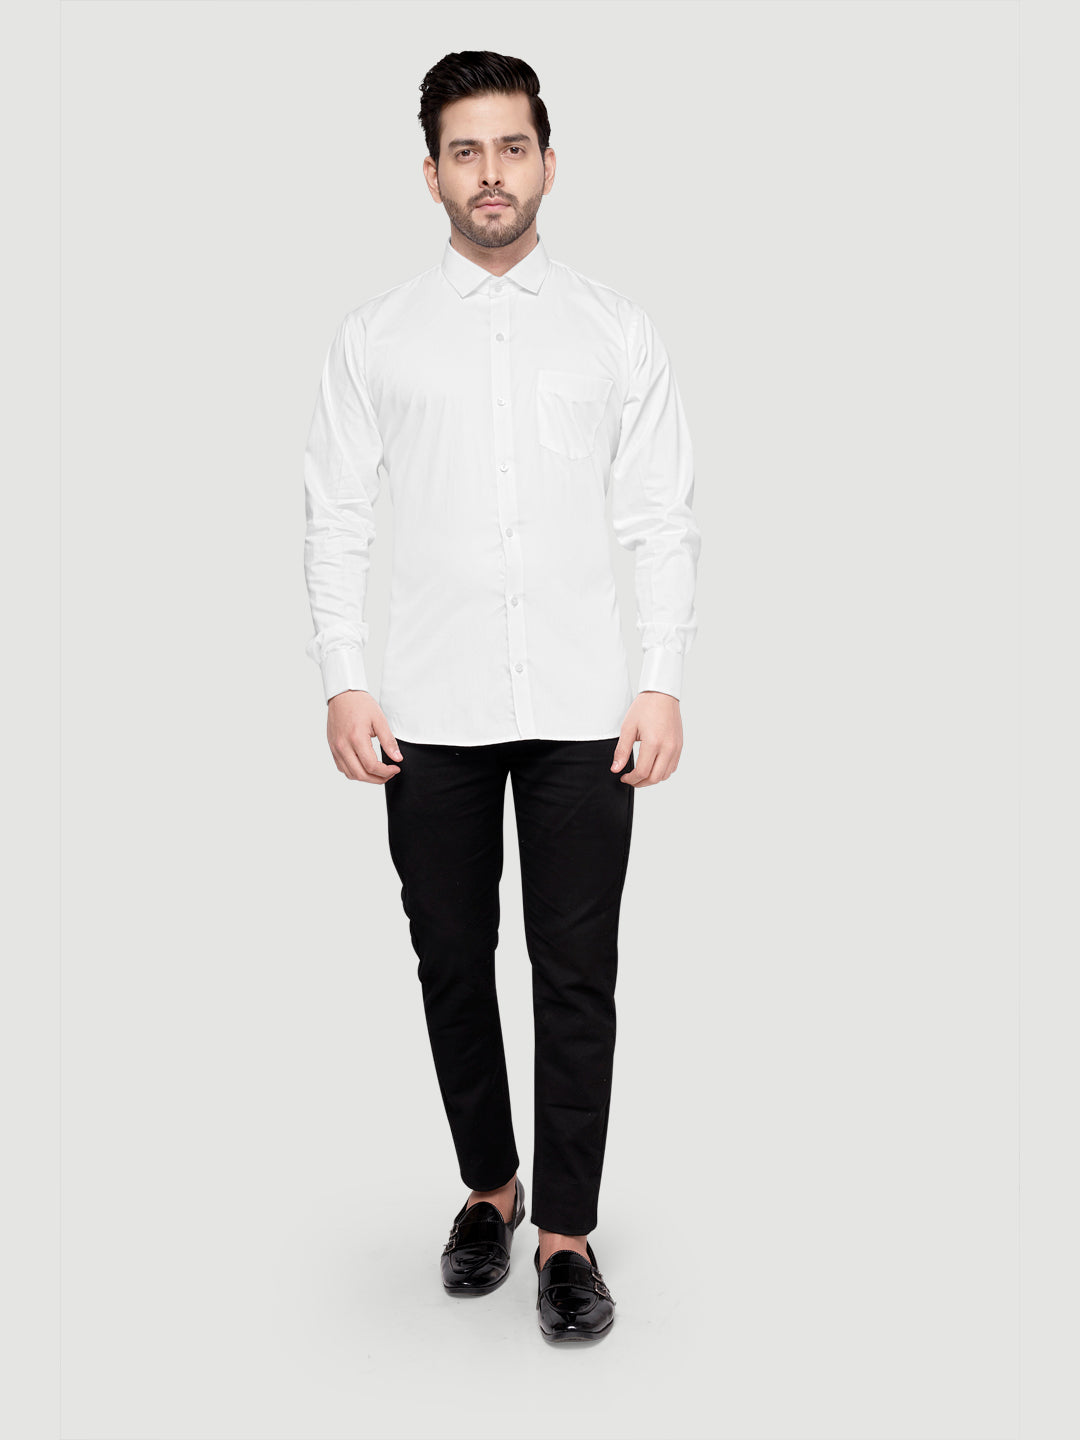 Black and White Shirts Men's Formal Cufflink Shirt White w/o bow